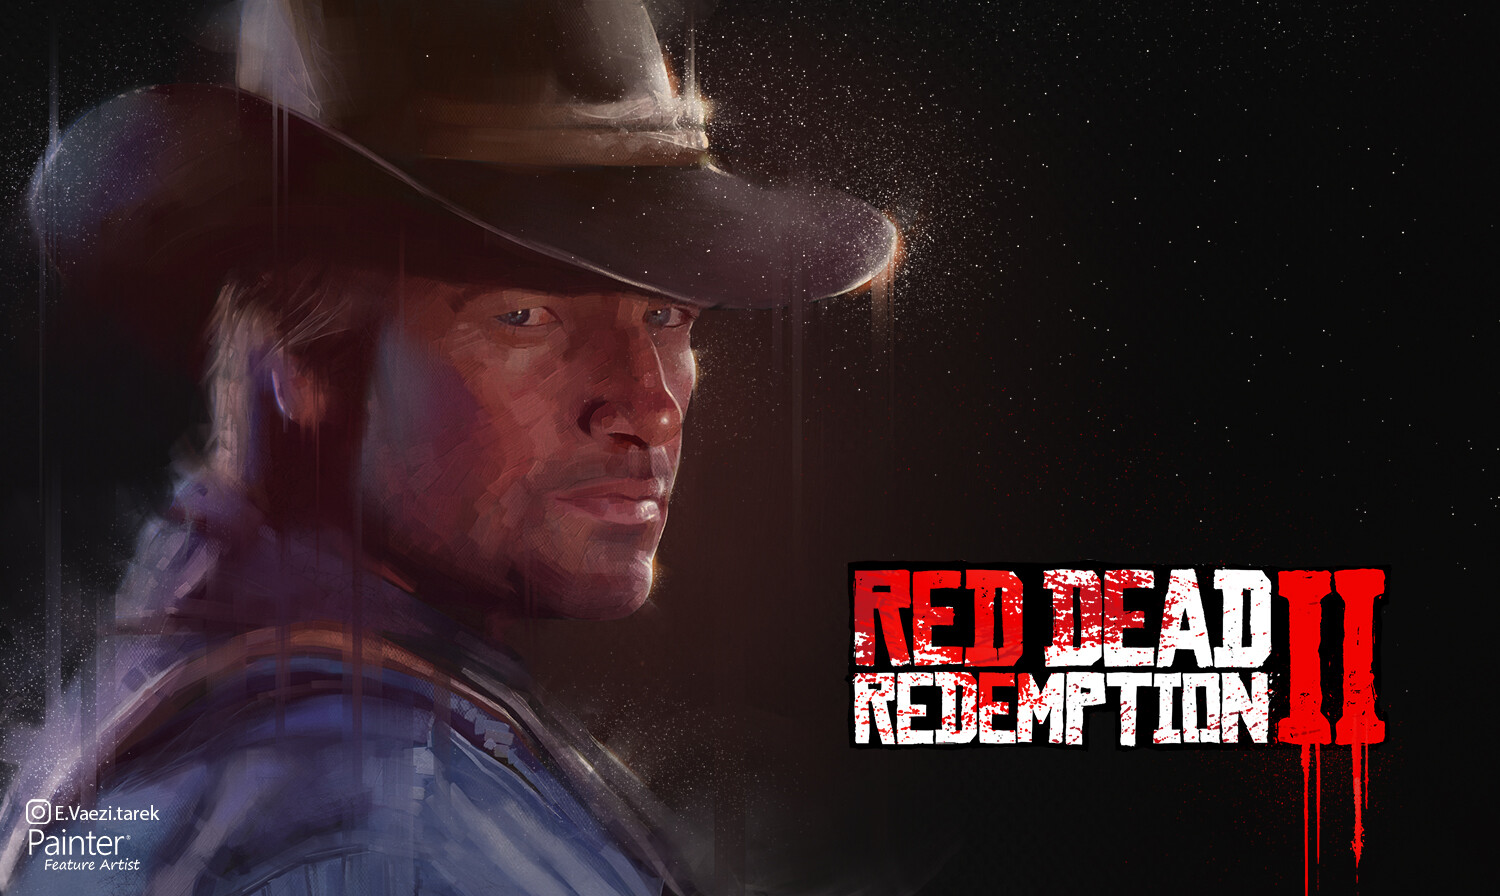 red dead redemption 2 - Arthur Morgan by ehsan vaezi